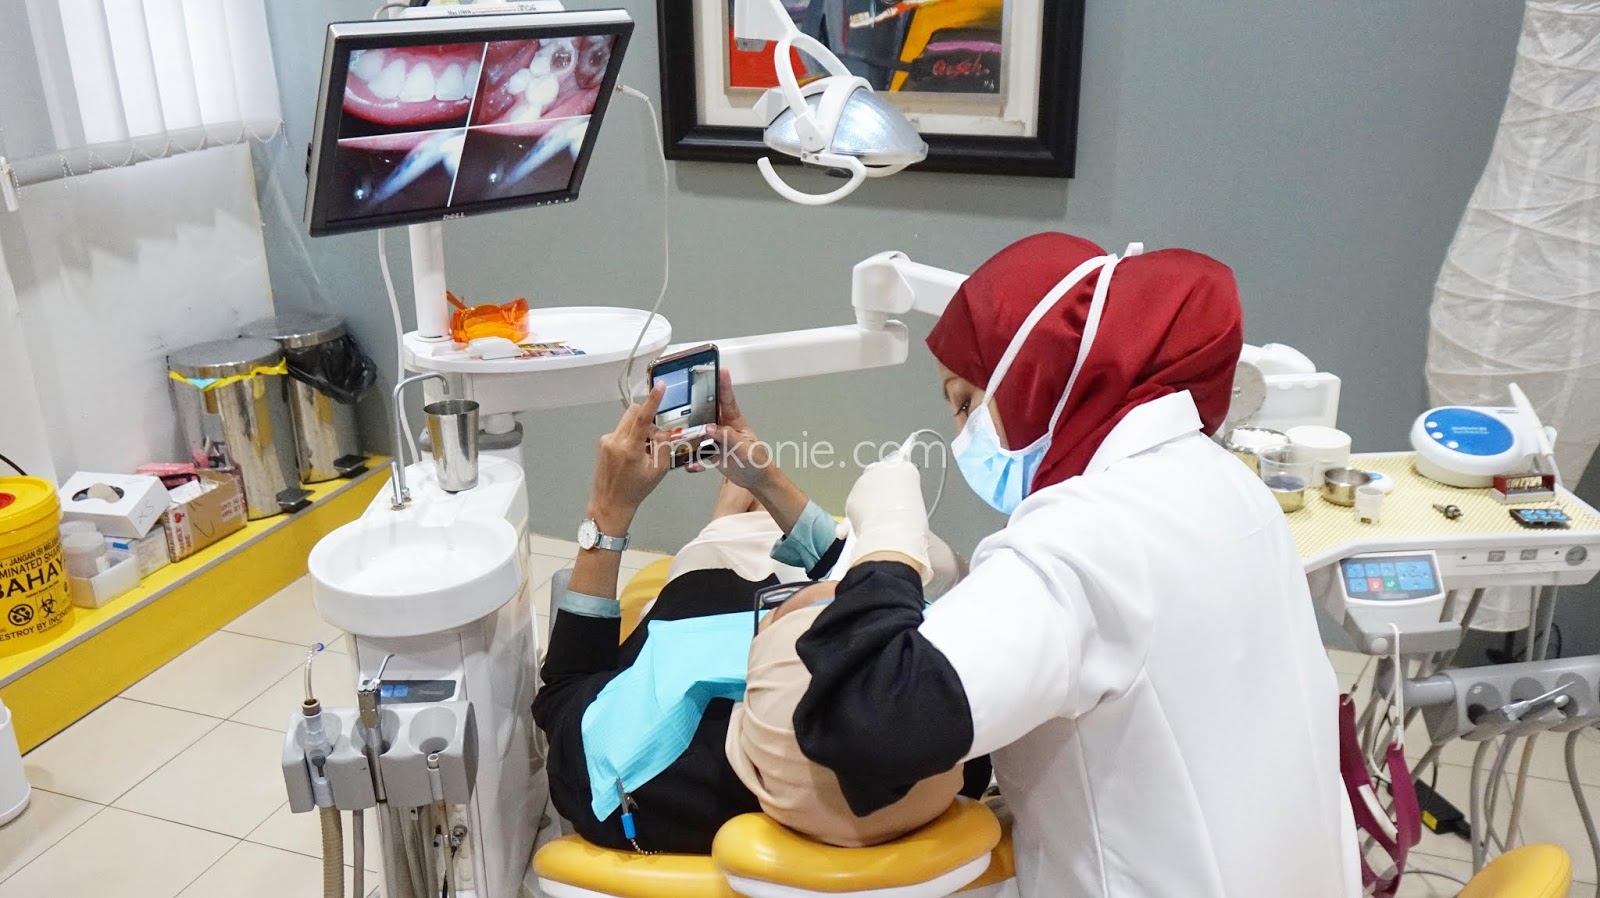 Pengalaman Scalling Gigi Di Klinik Pergigian Qaseh Dental Mek Onie